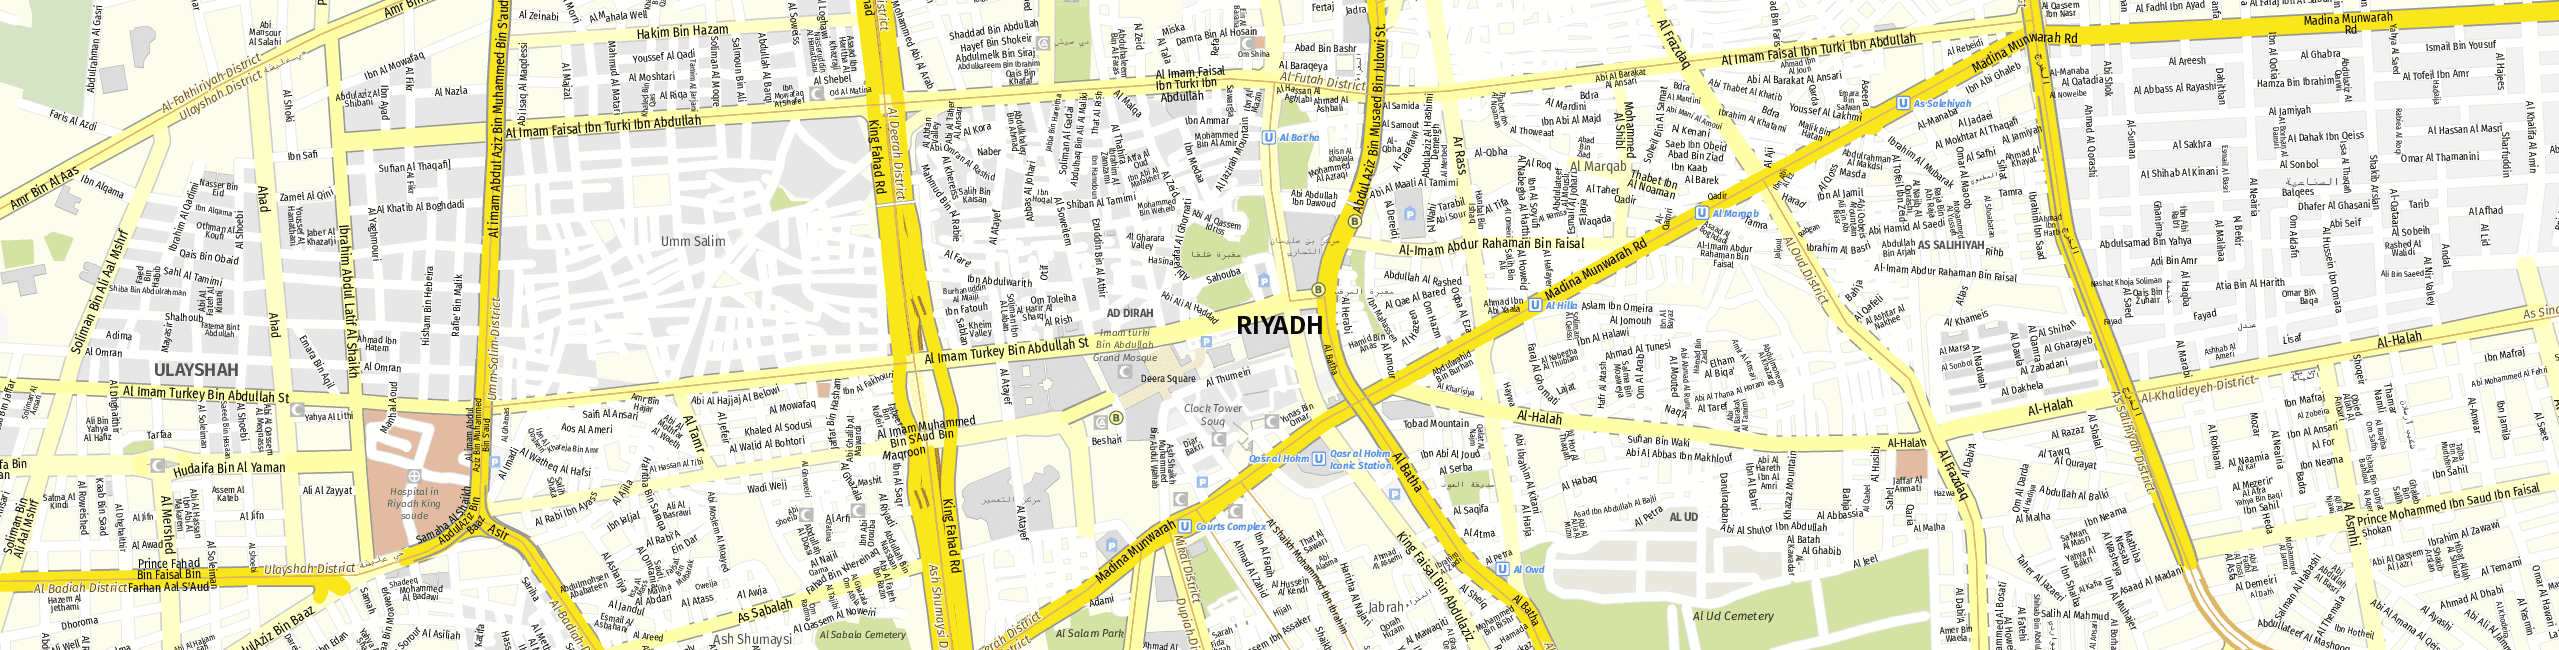 Stadtplan Riad zum Downloaden.